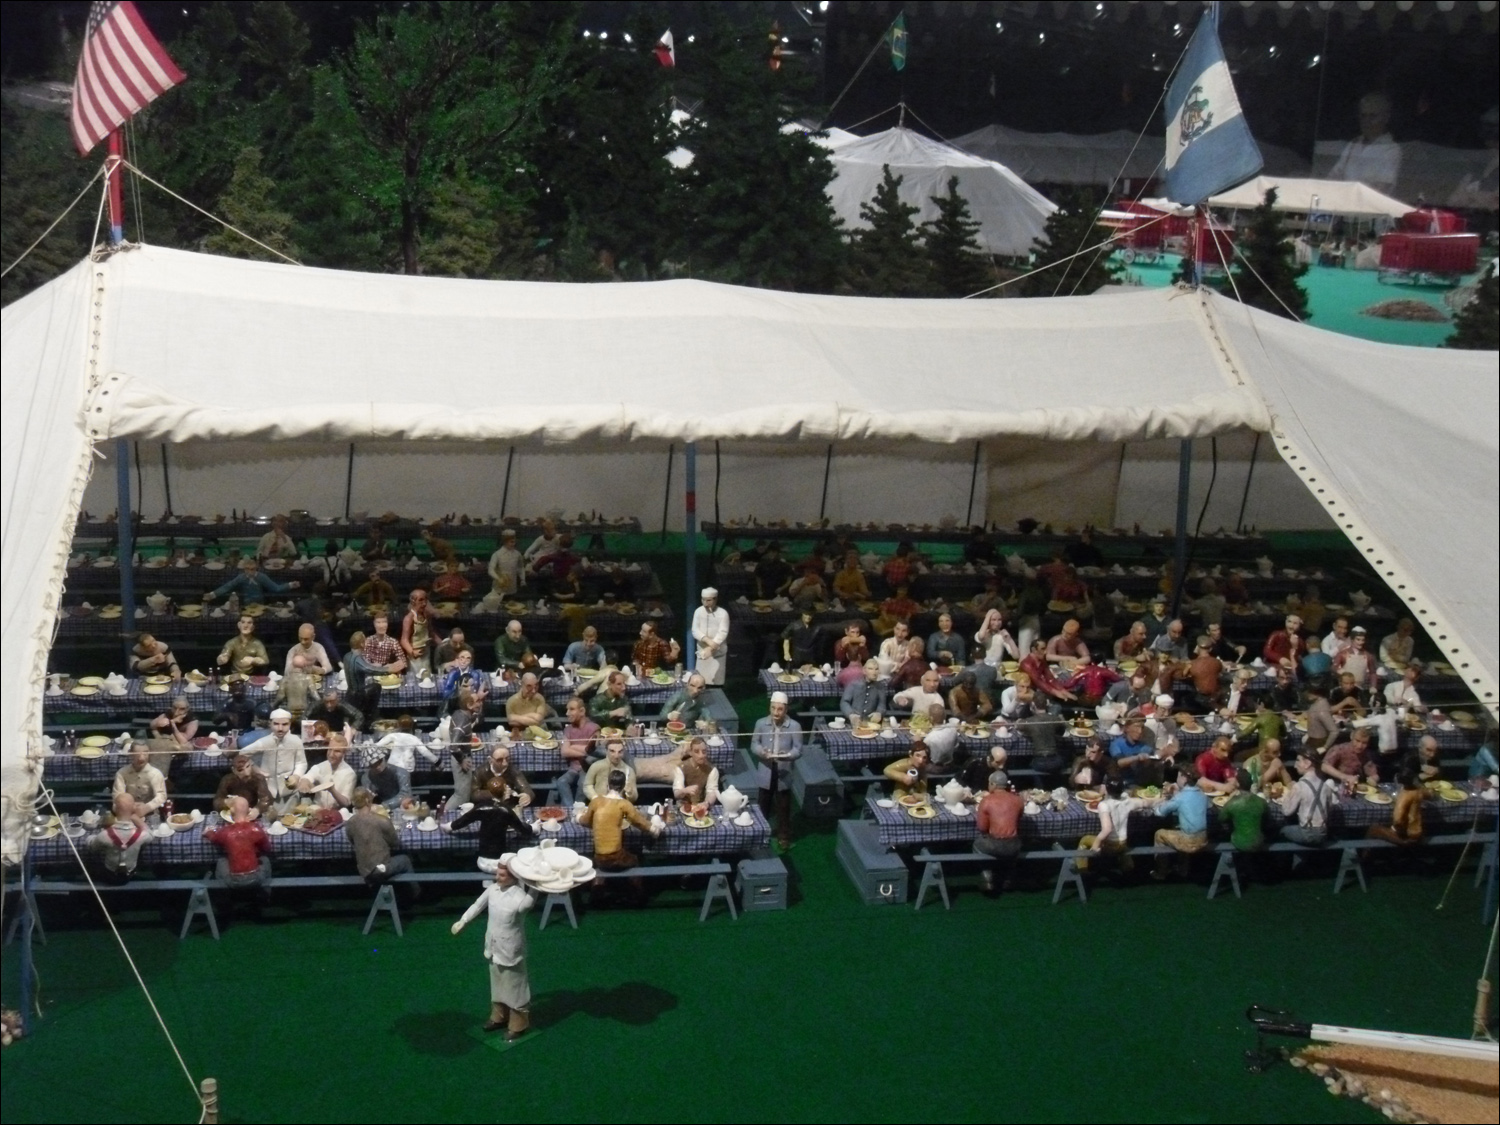 John & Mabel Ringling Museum-miniature (3500 sq ft) big top-eating tent for staff